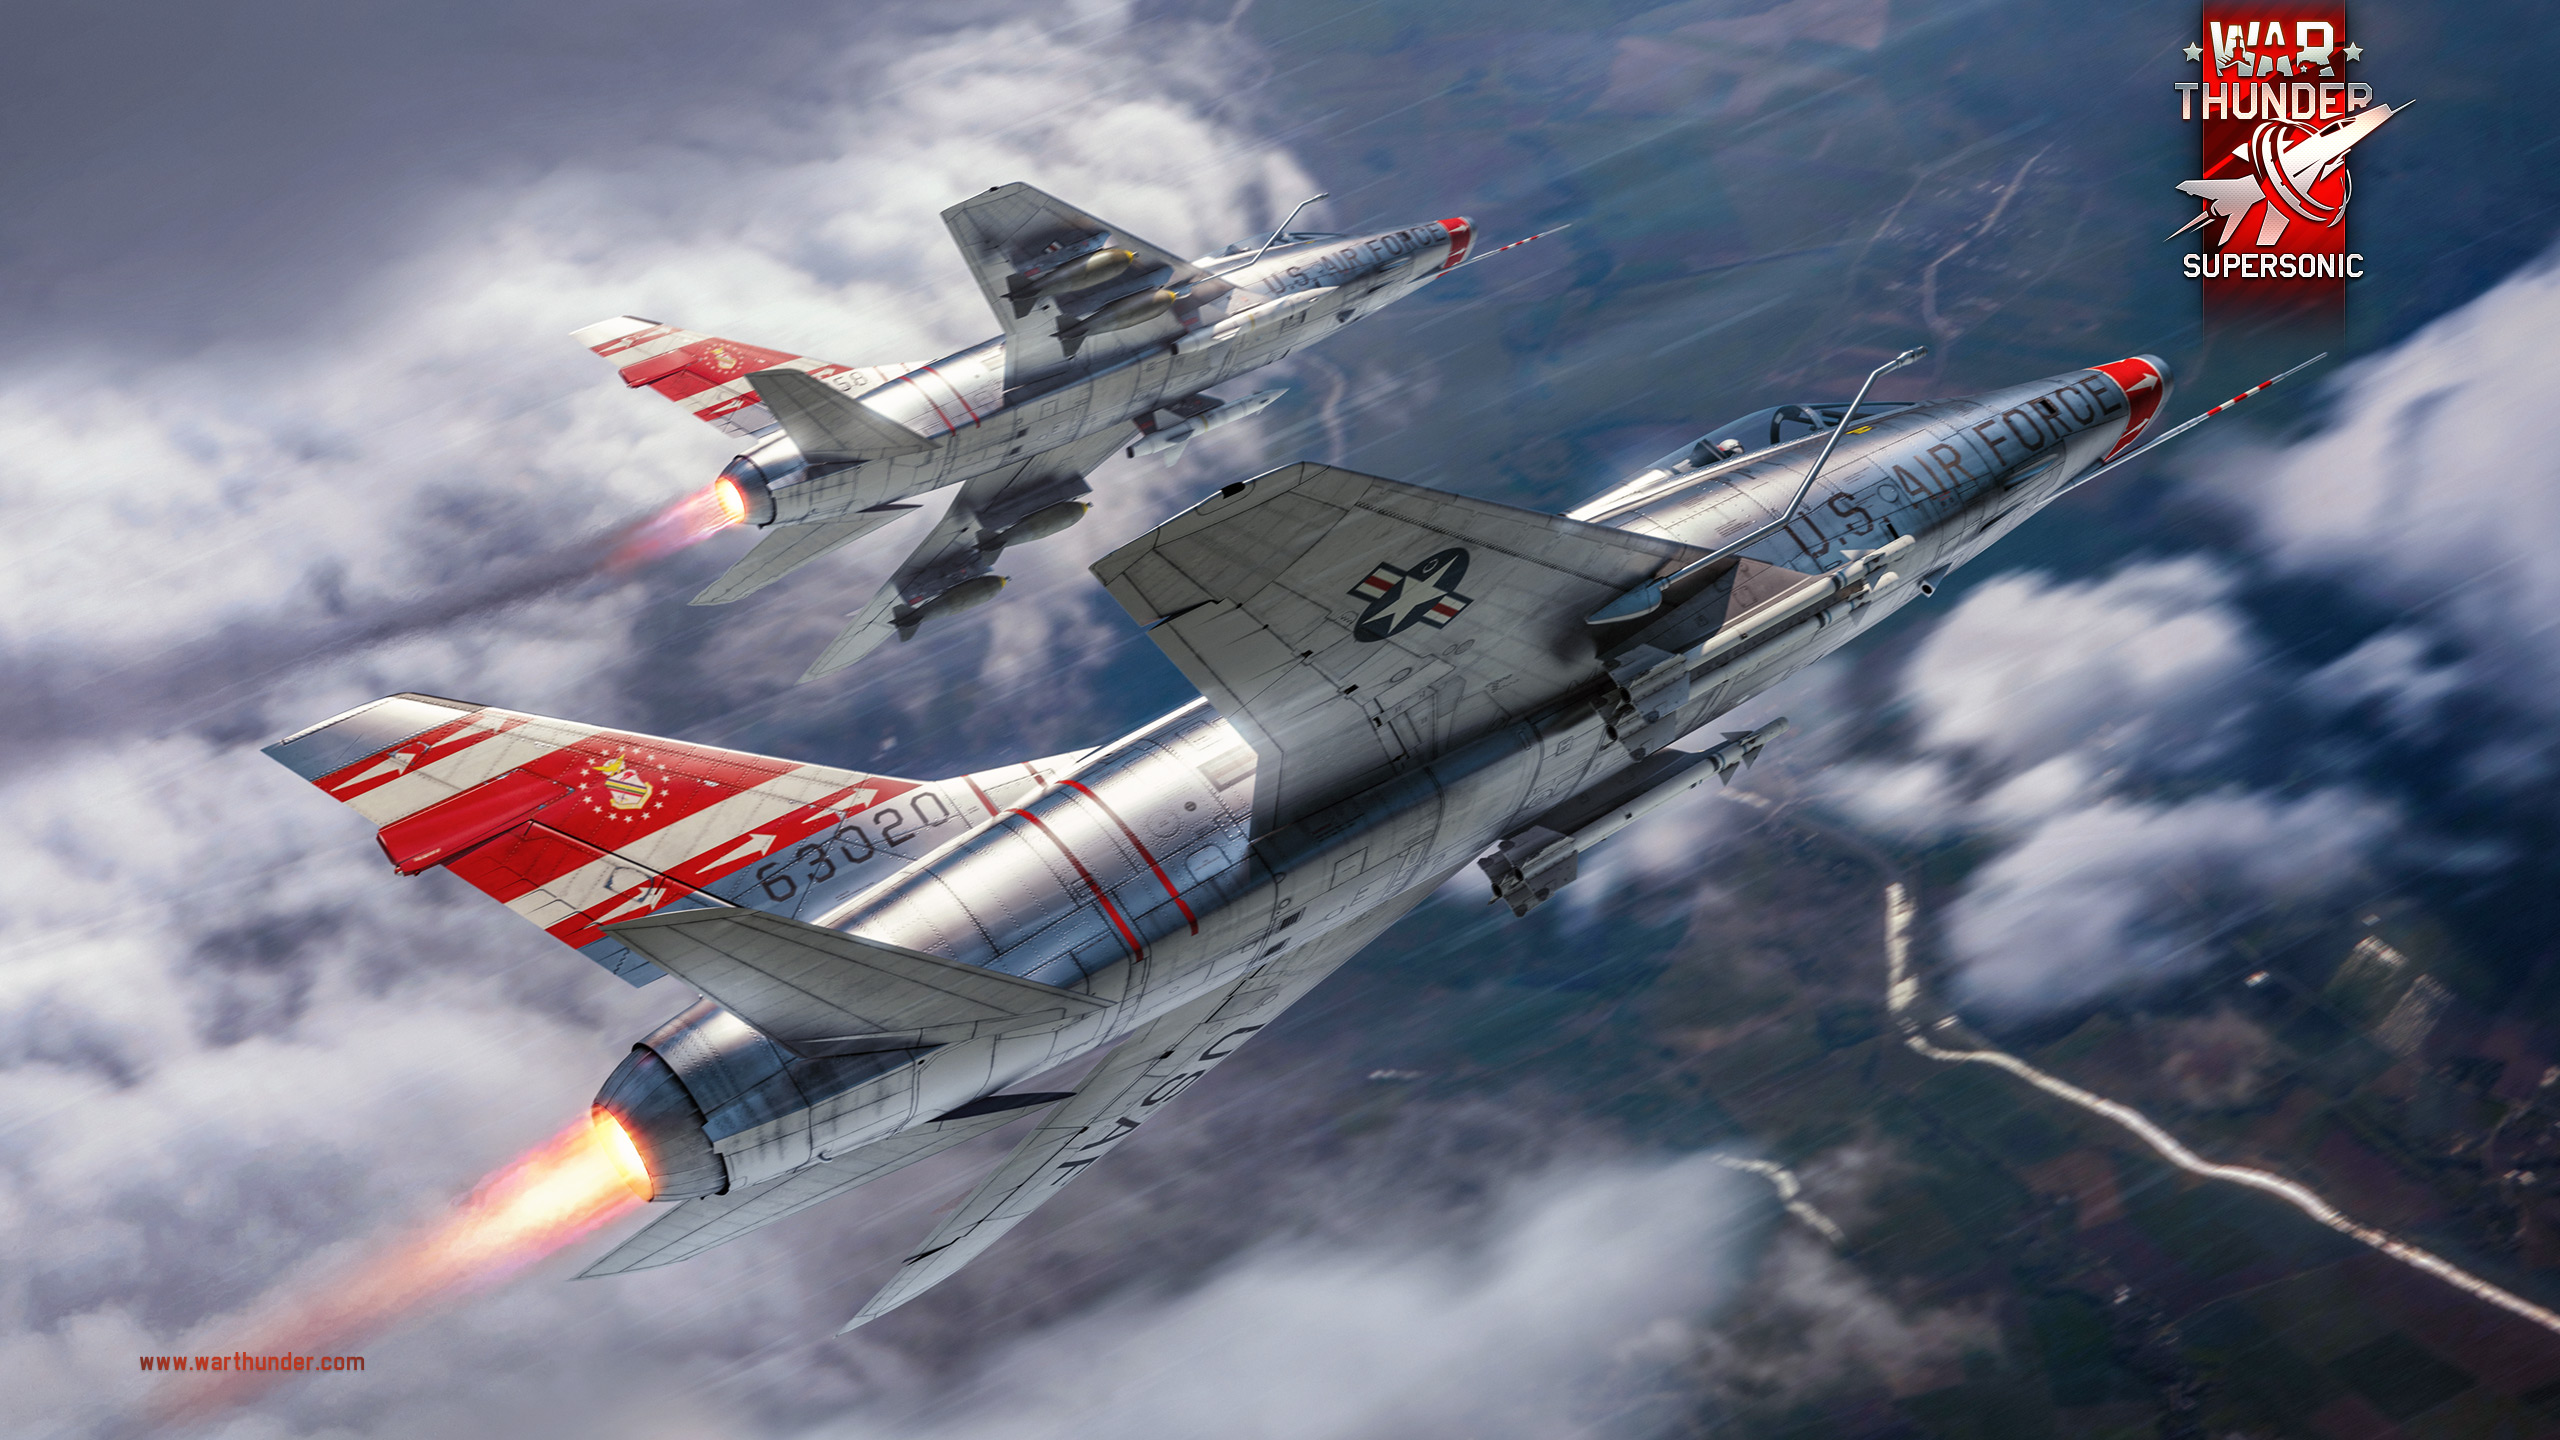 war thunder wallpaper,aircraft,vehicle,airplane,military aircraft,jet aircraft